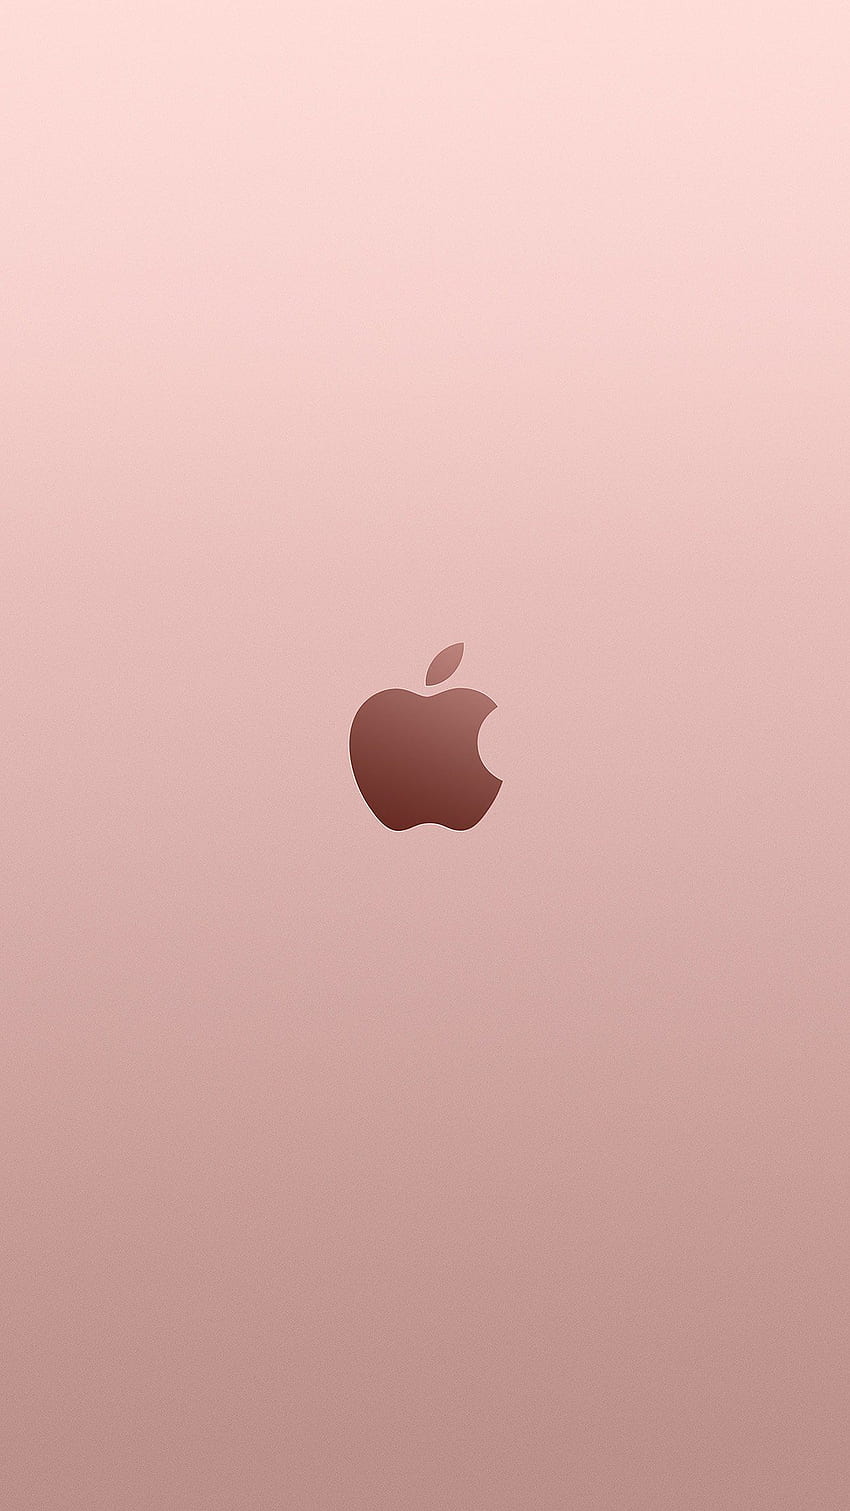 Apple Pink Rose Gold Minimale Illustrationskunst Android - iPhone 8 Plus Rose Gold - -, Pink Apple 5 HD-Handy-Hintergrundbild